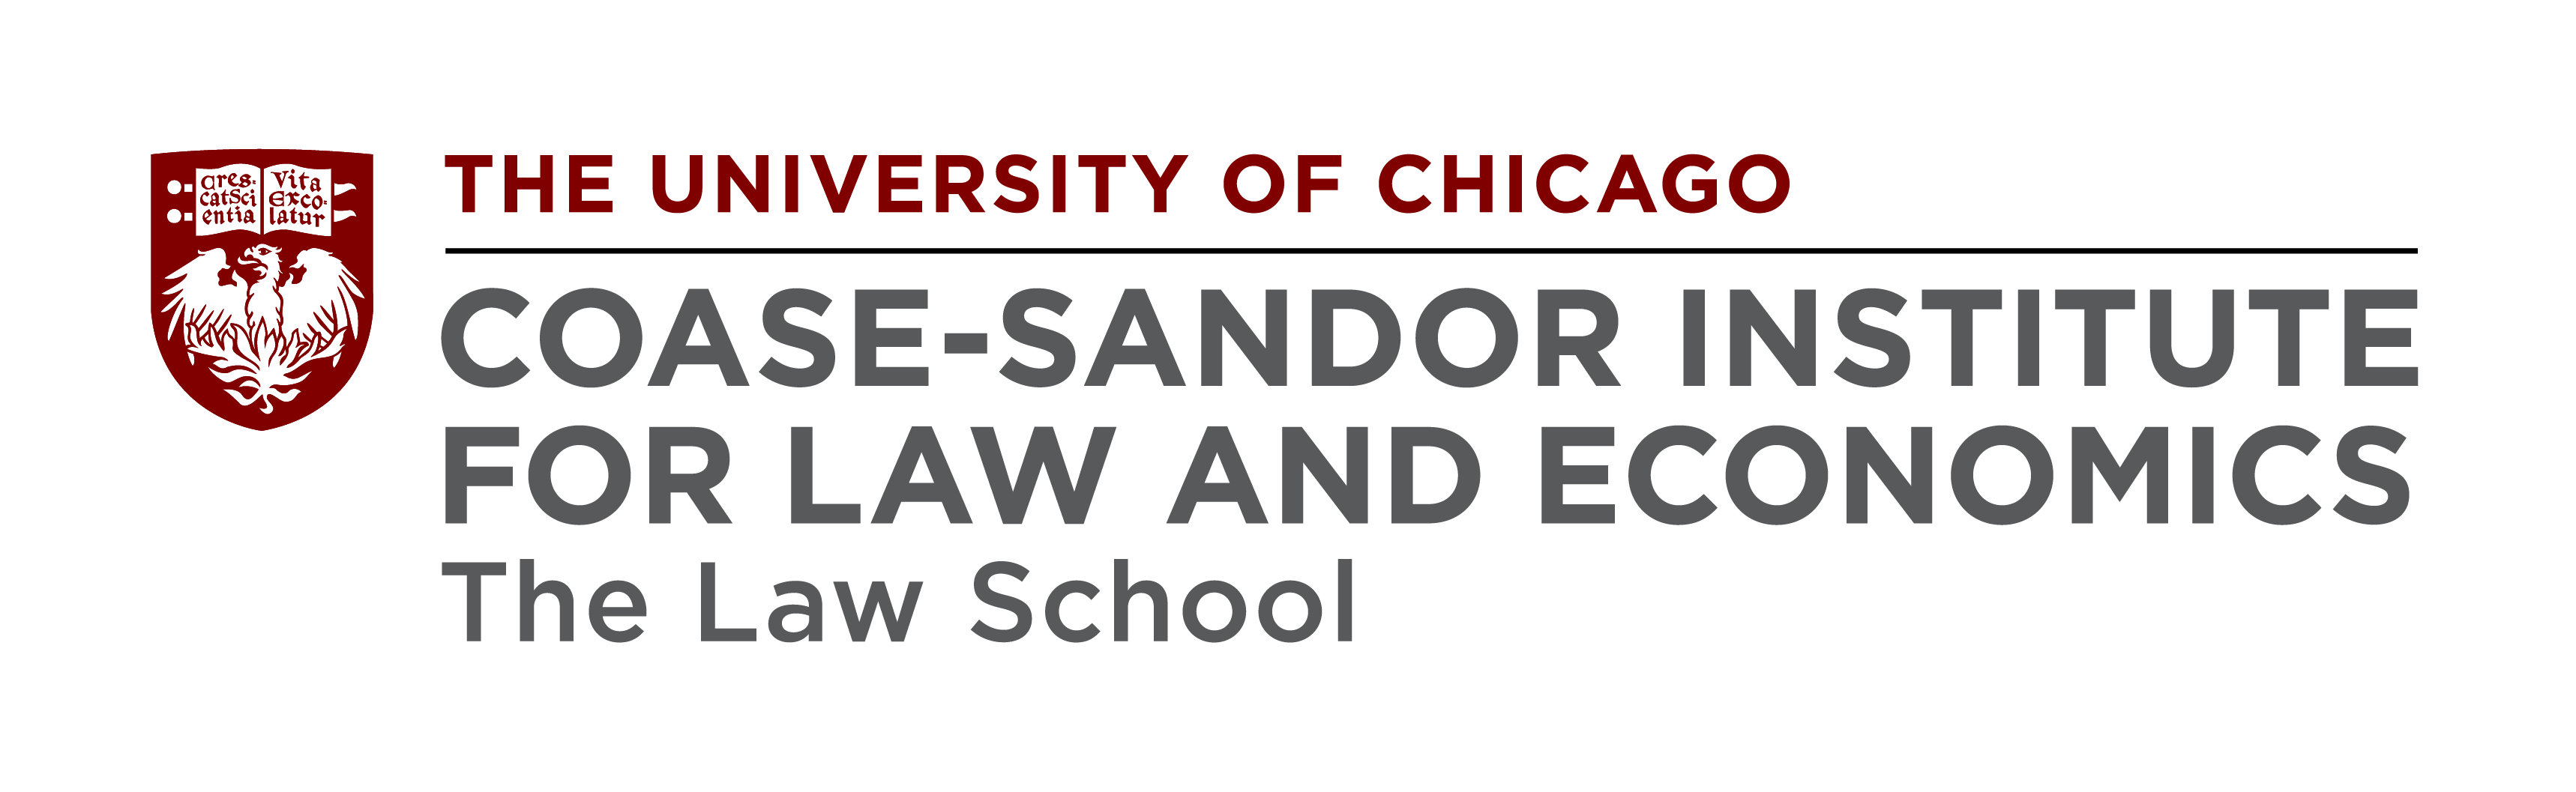 Coase-Sandor Working Paper Series in Law and Economics